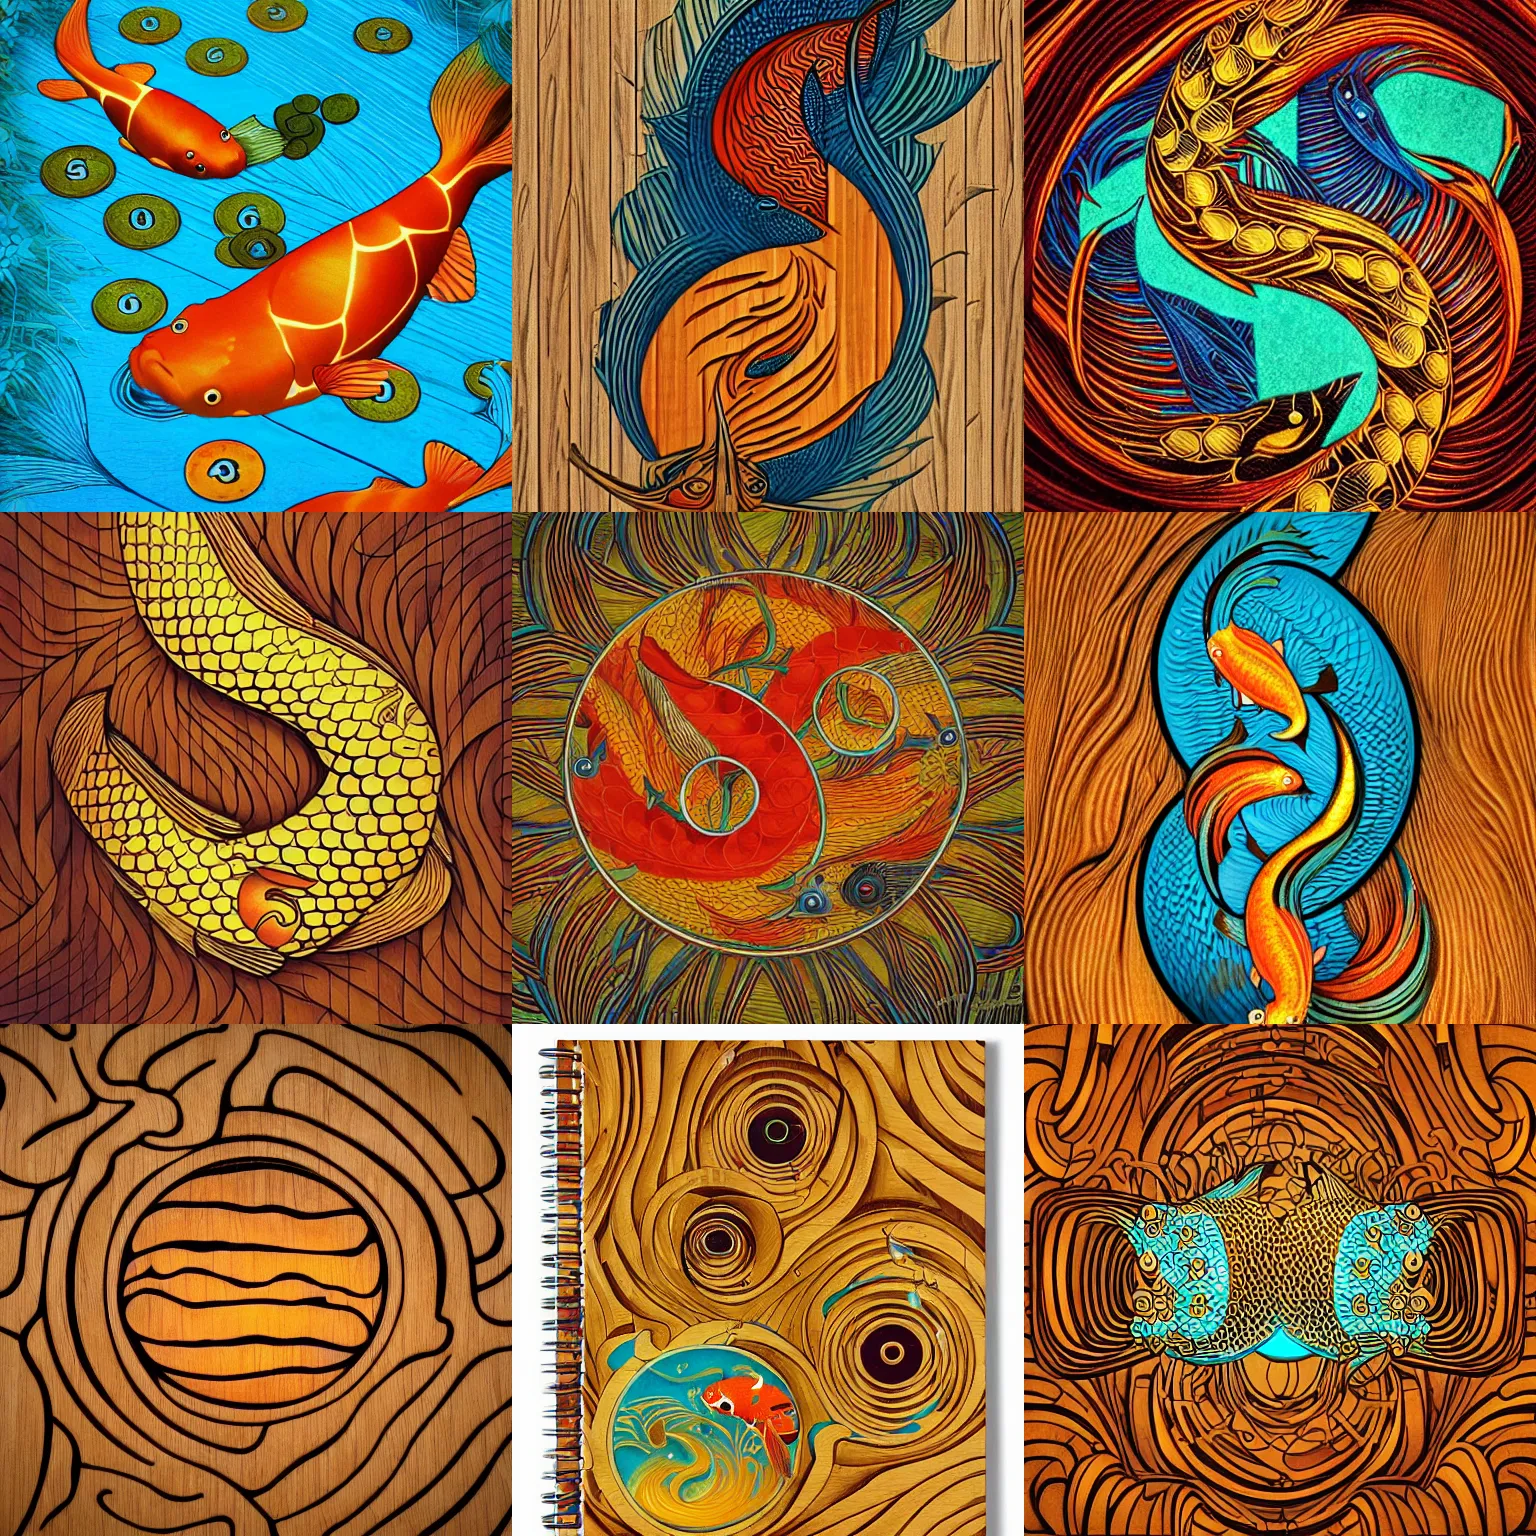 Prompt: koi fishes, fibonacci, golden ratio, sacred numbers, by audrey kawasaki, by loish, barbbara cannepa global illumination, cool colors, wood texture on top, unreal engine